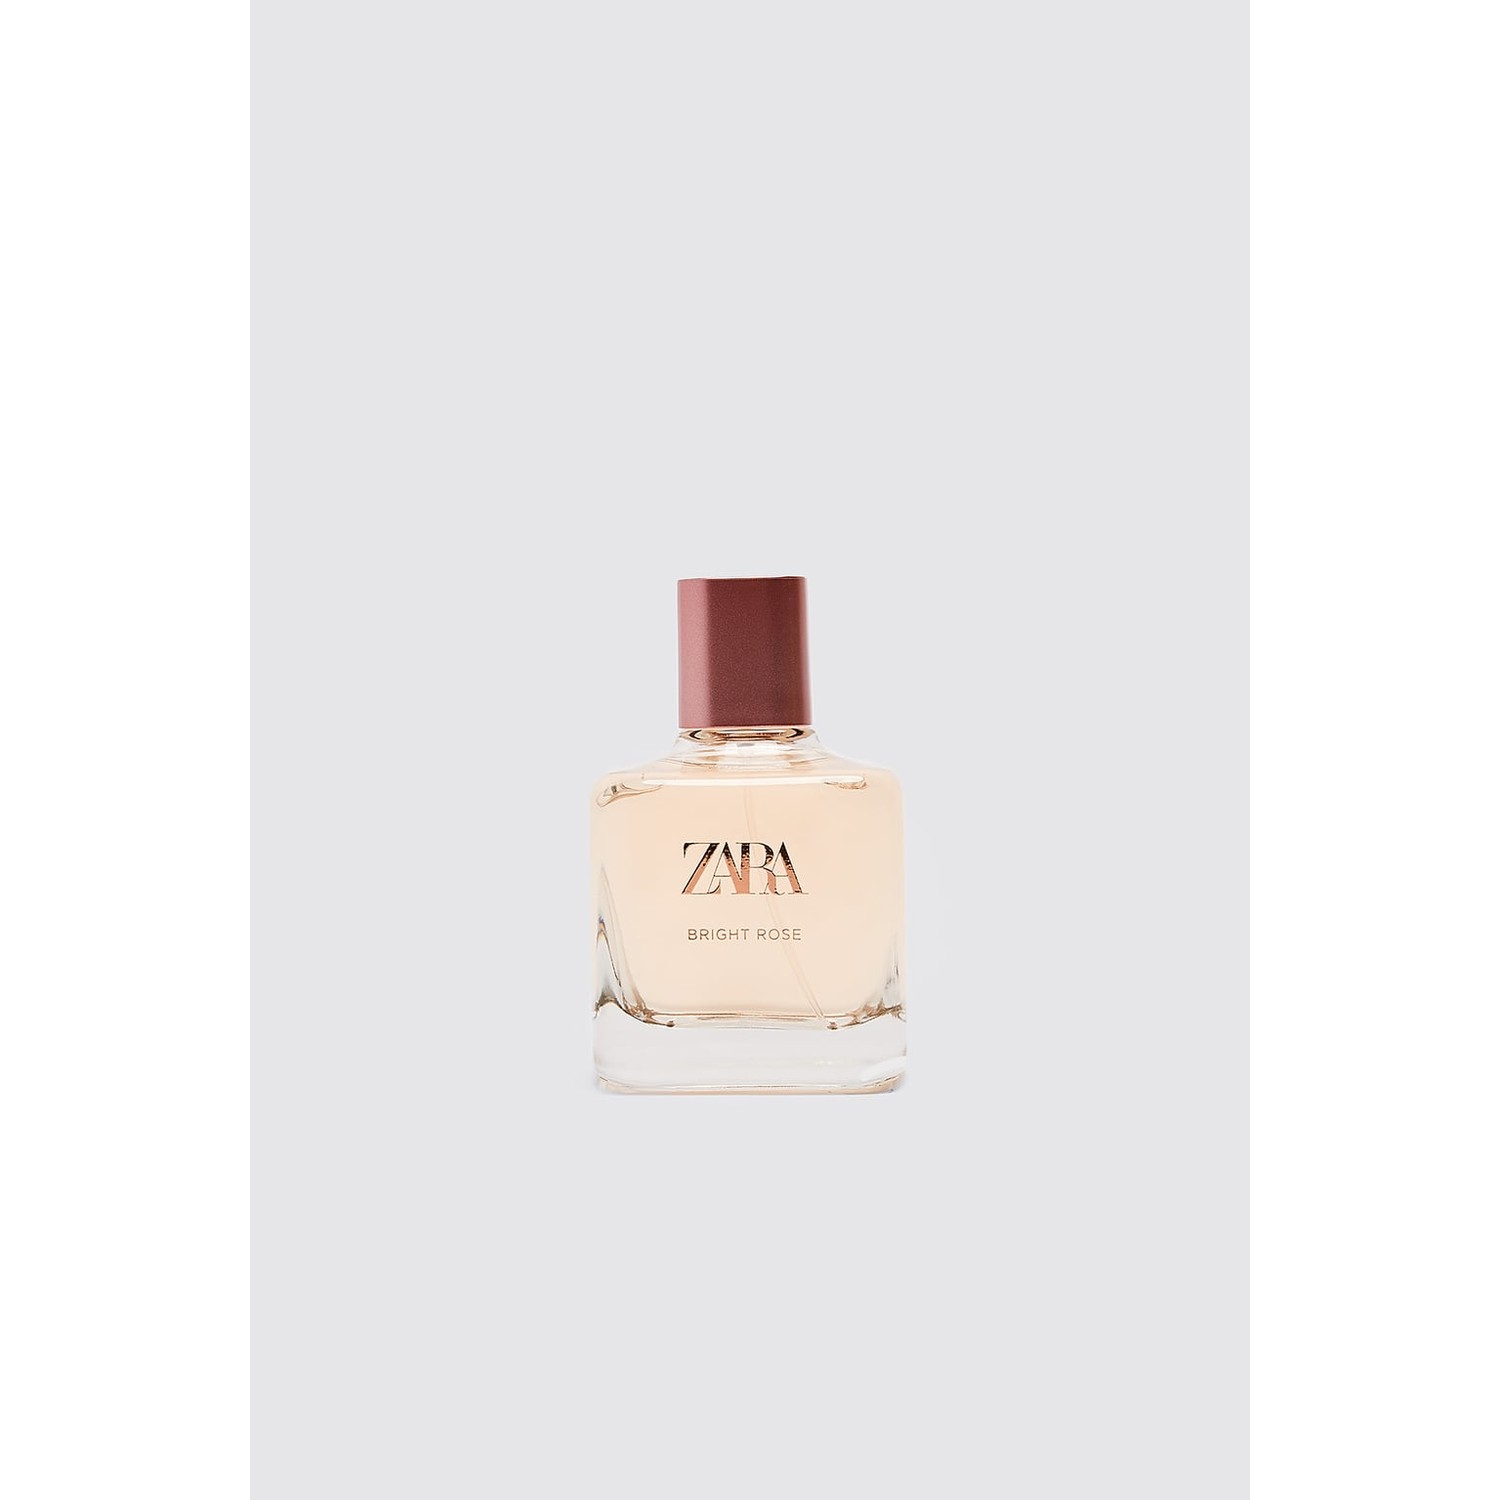 zara bright rose perfume